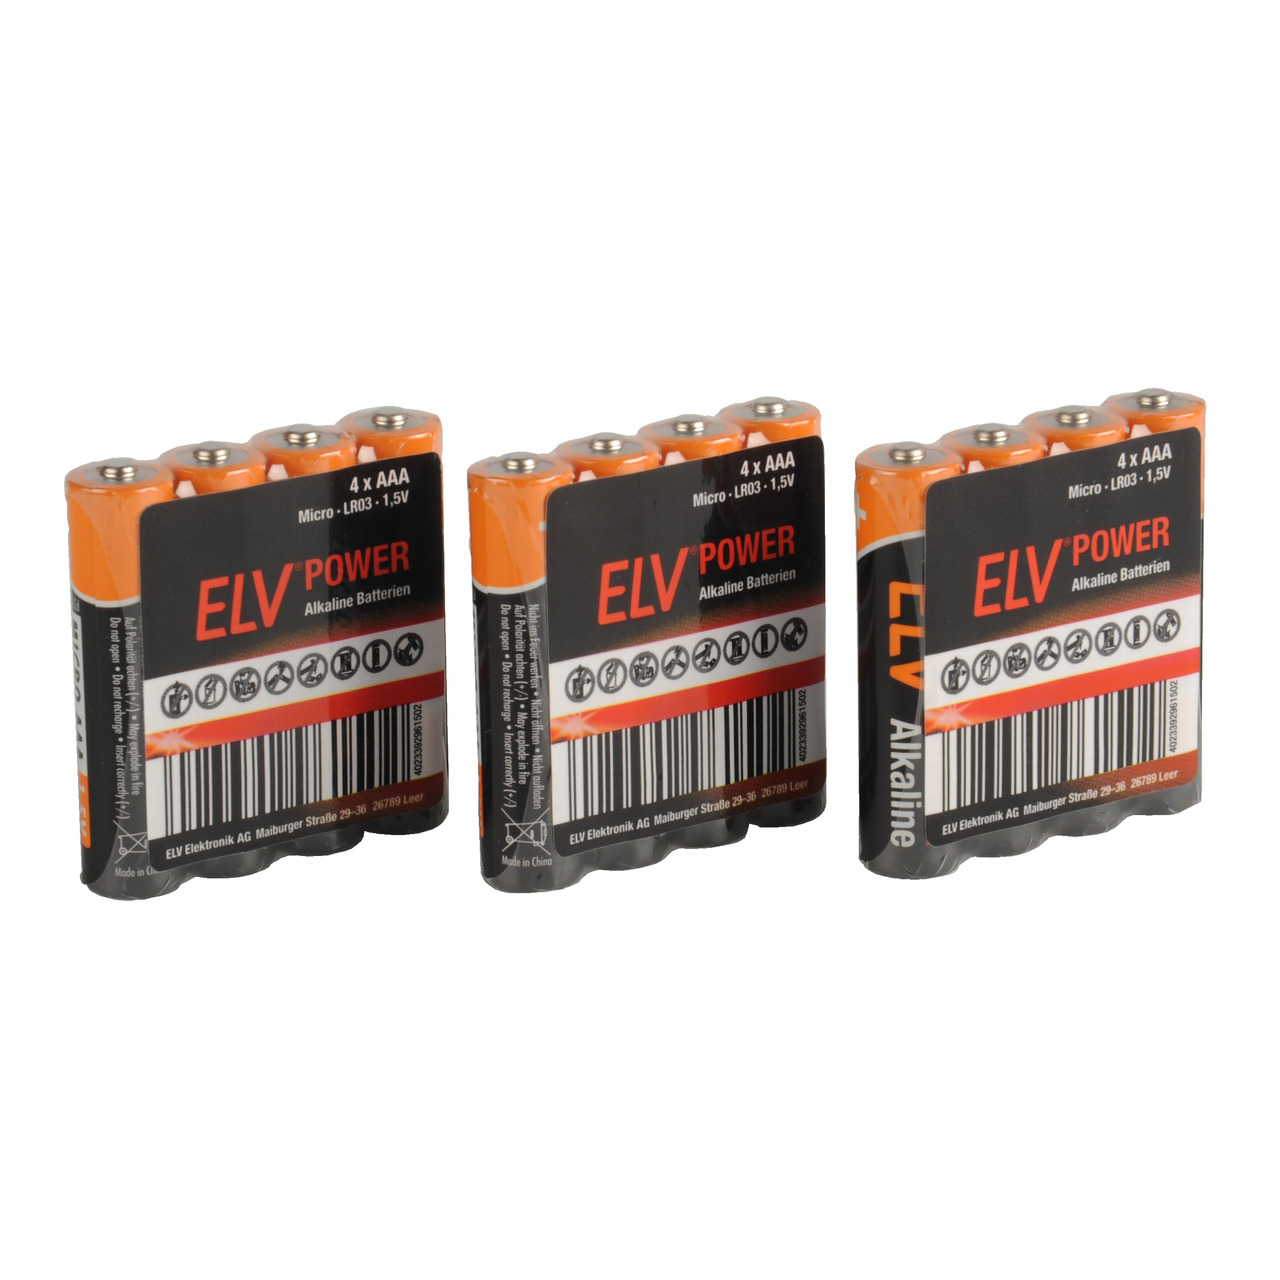 ELV POWER Alkaline Batterie Micro AAA- 12 Stück